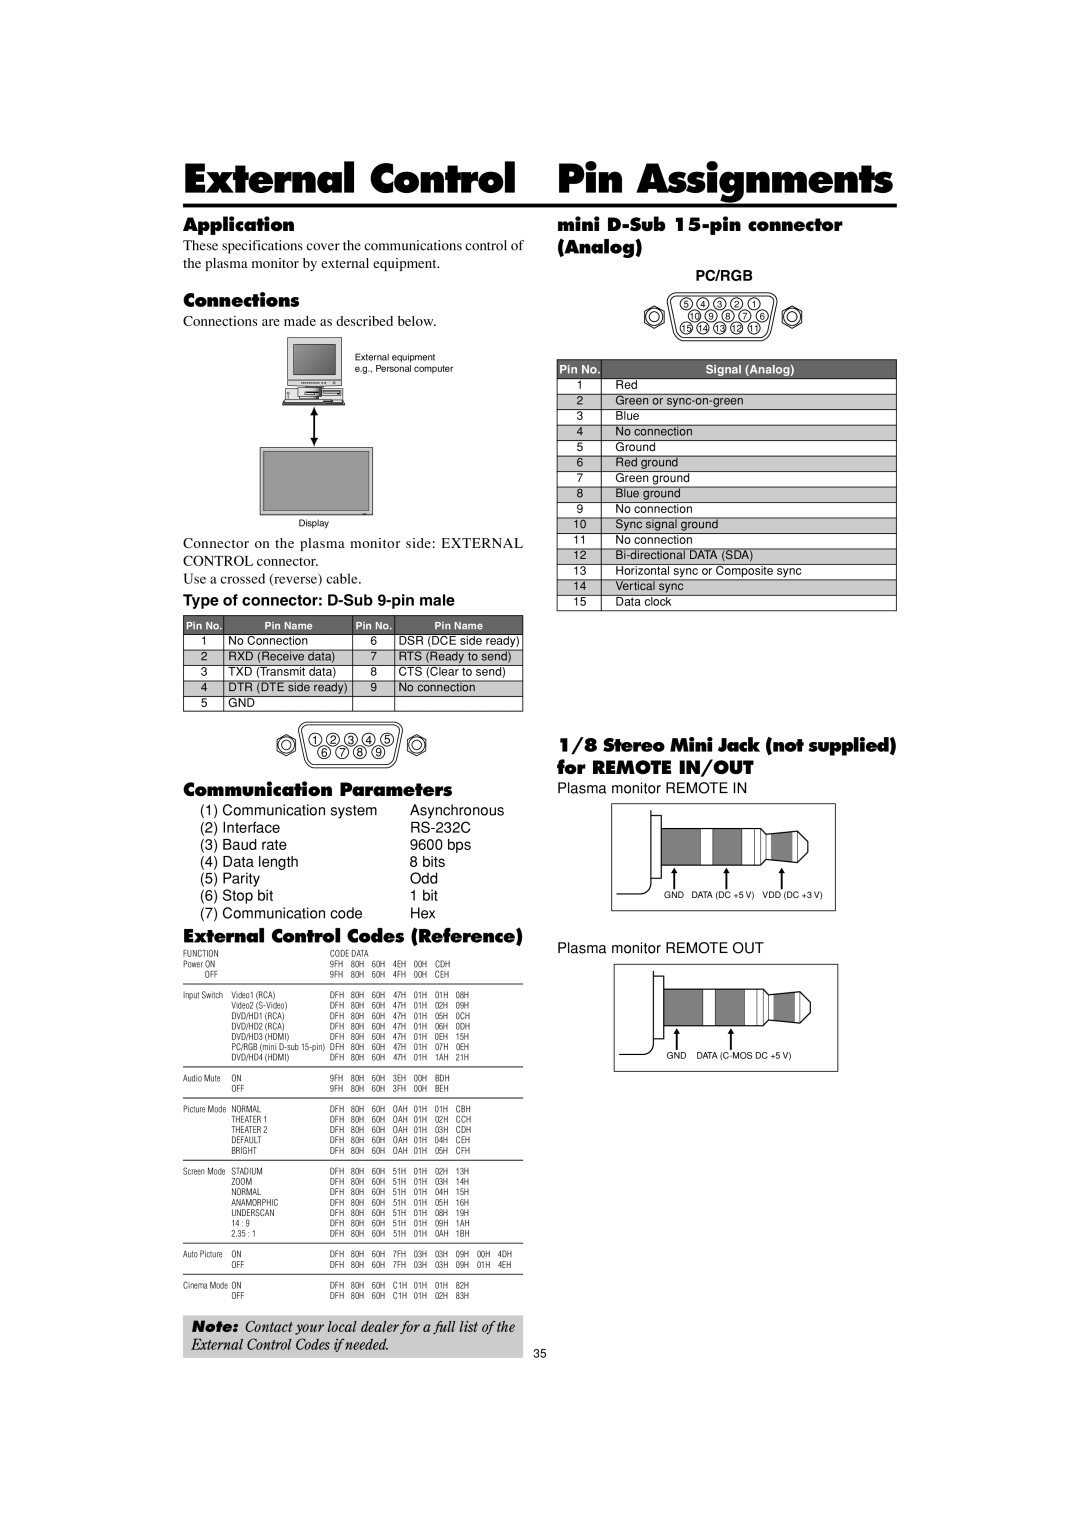 Marantz PD5001 manual External Control, Pin Assignments, Application, Connections, Communication Parameters, Pc/Rgb 